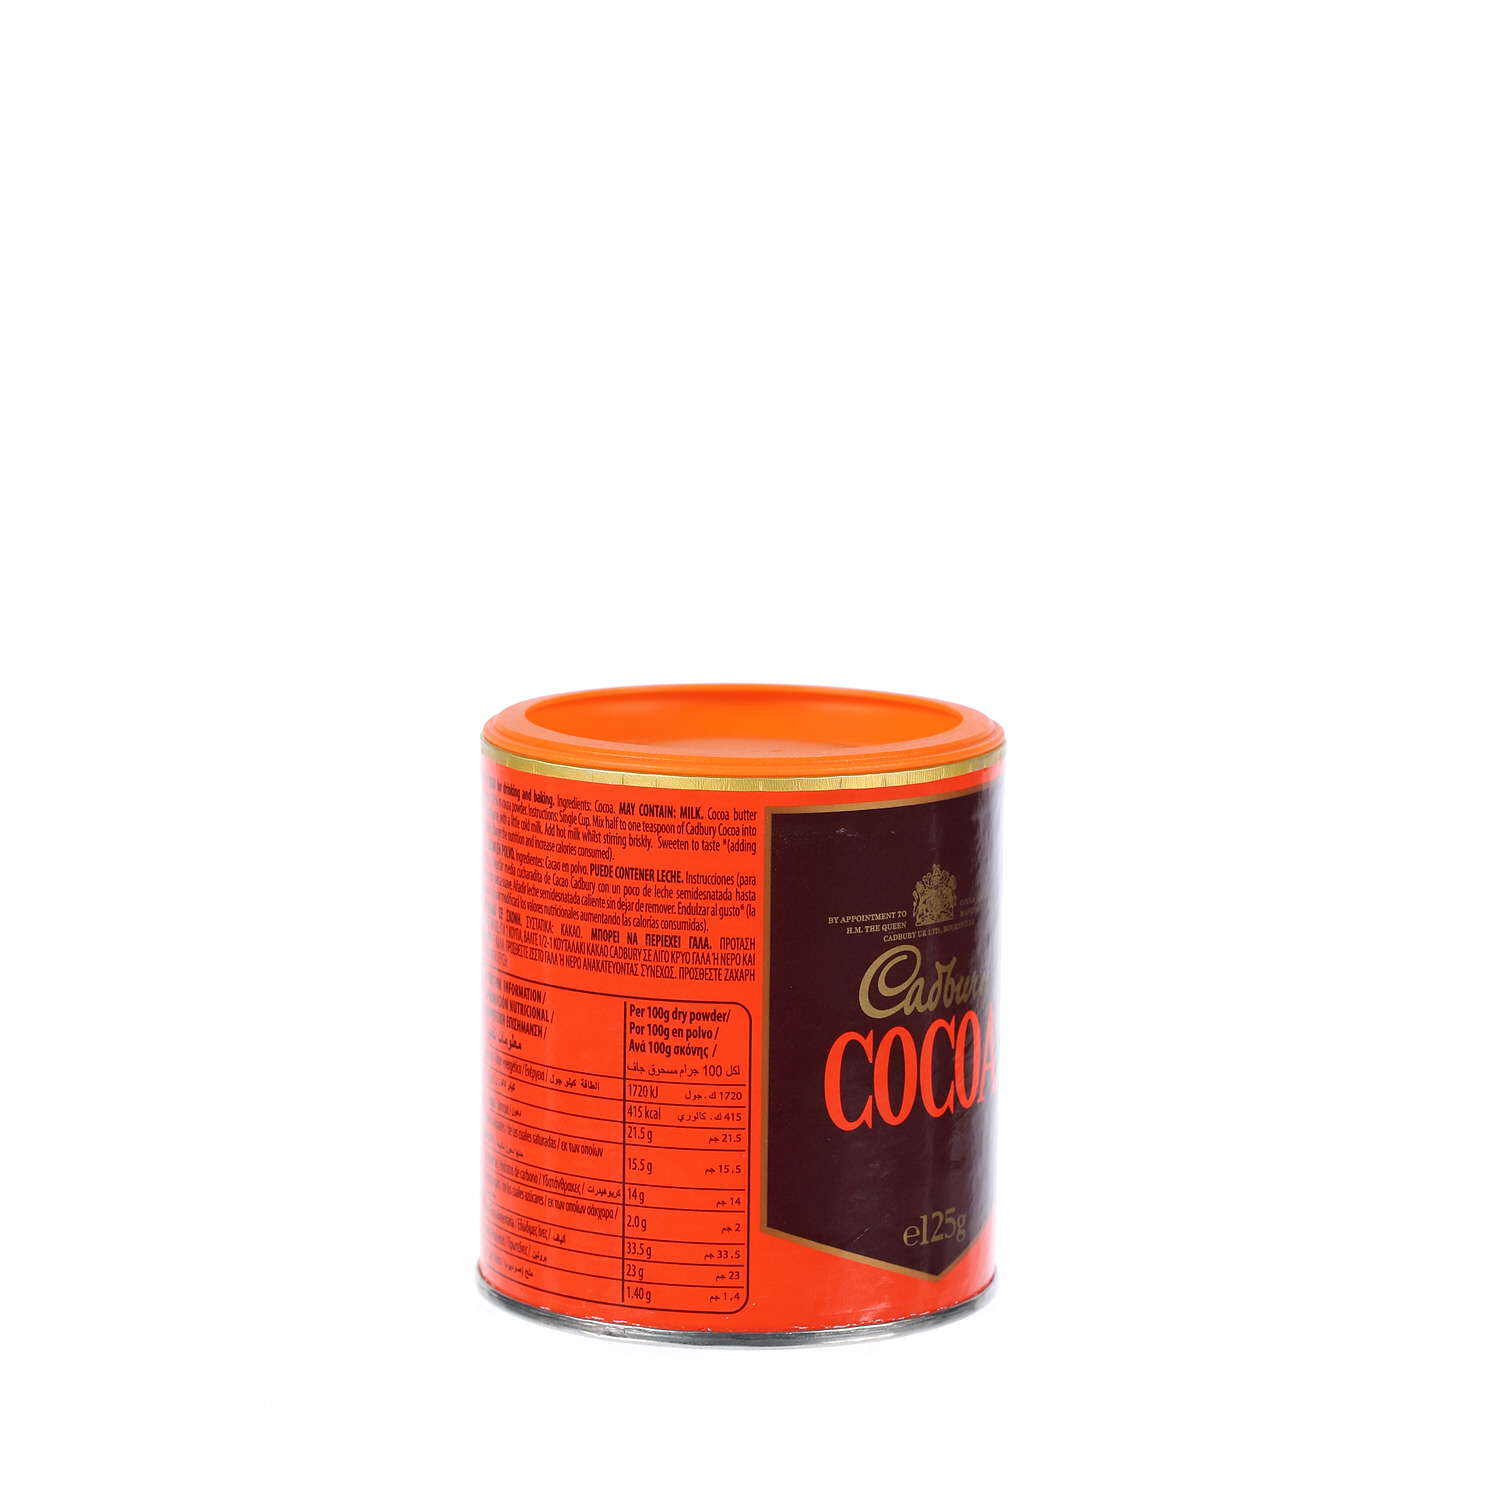 Cadbury Cocoa Powder 125 g